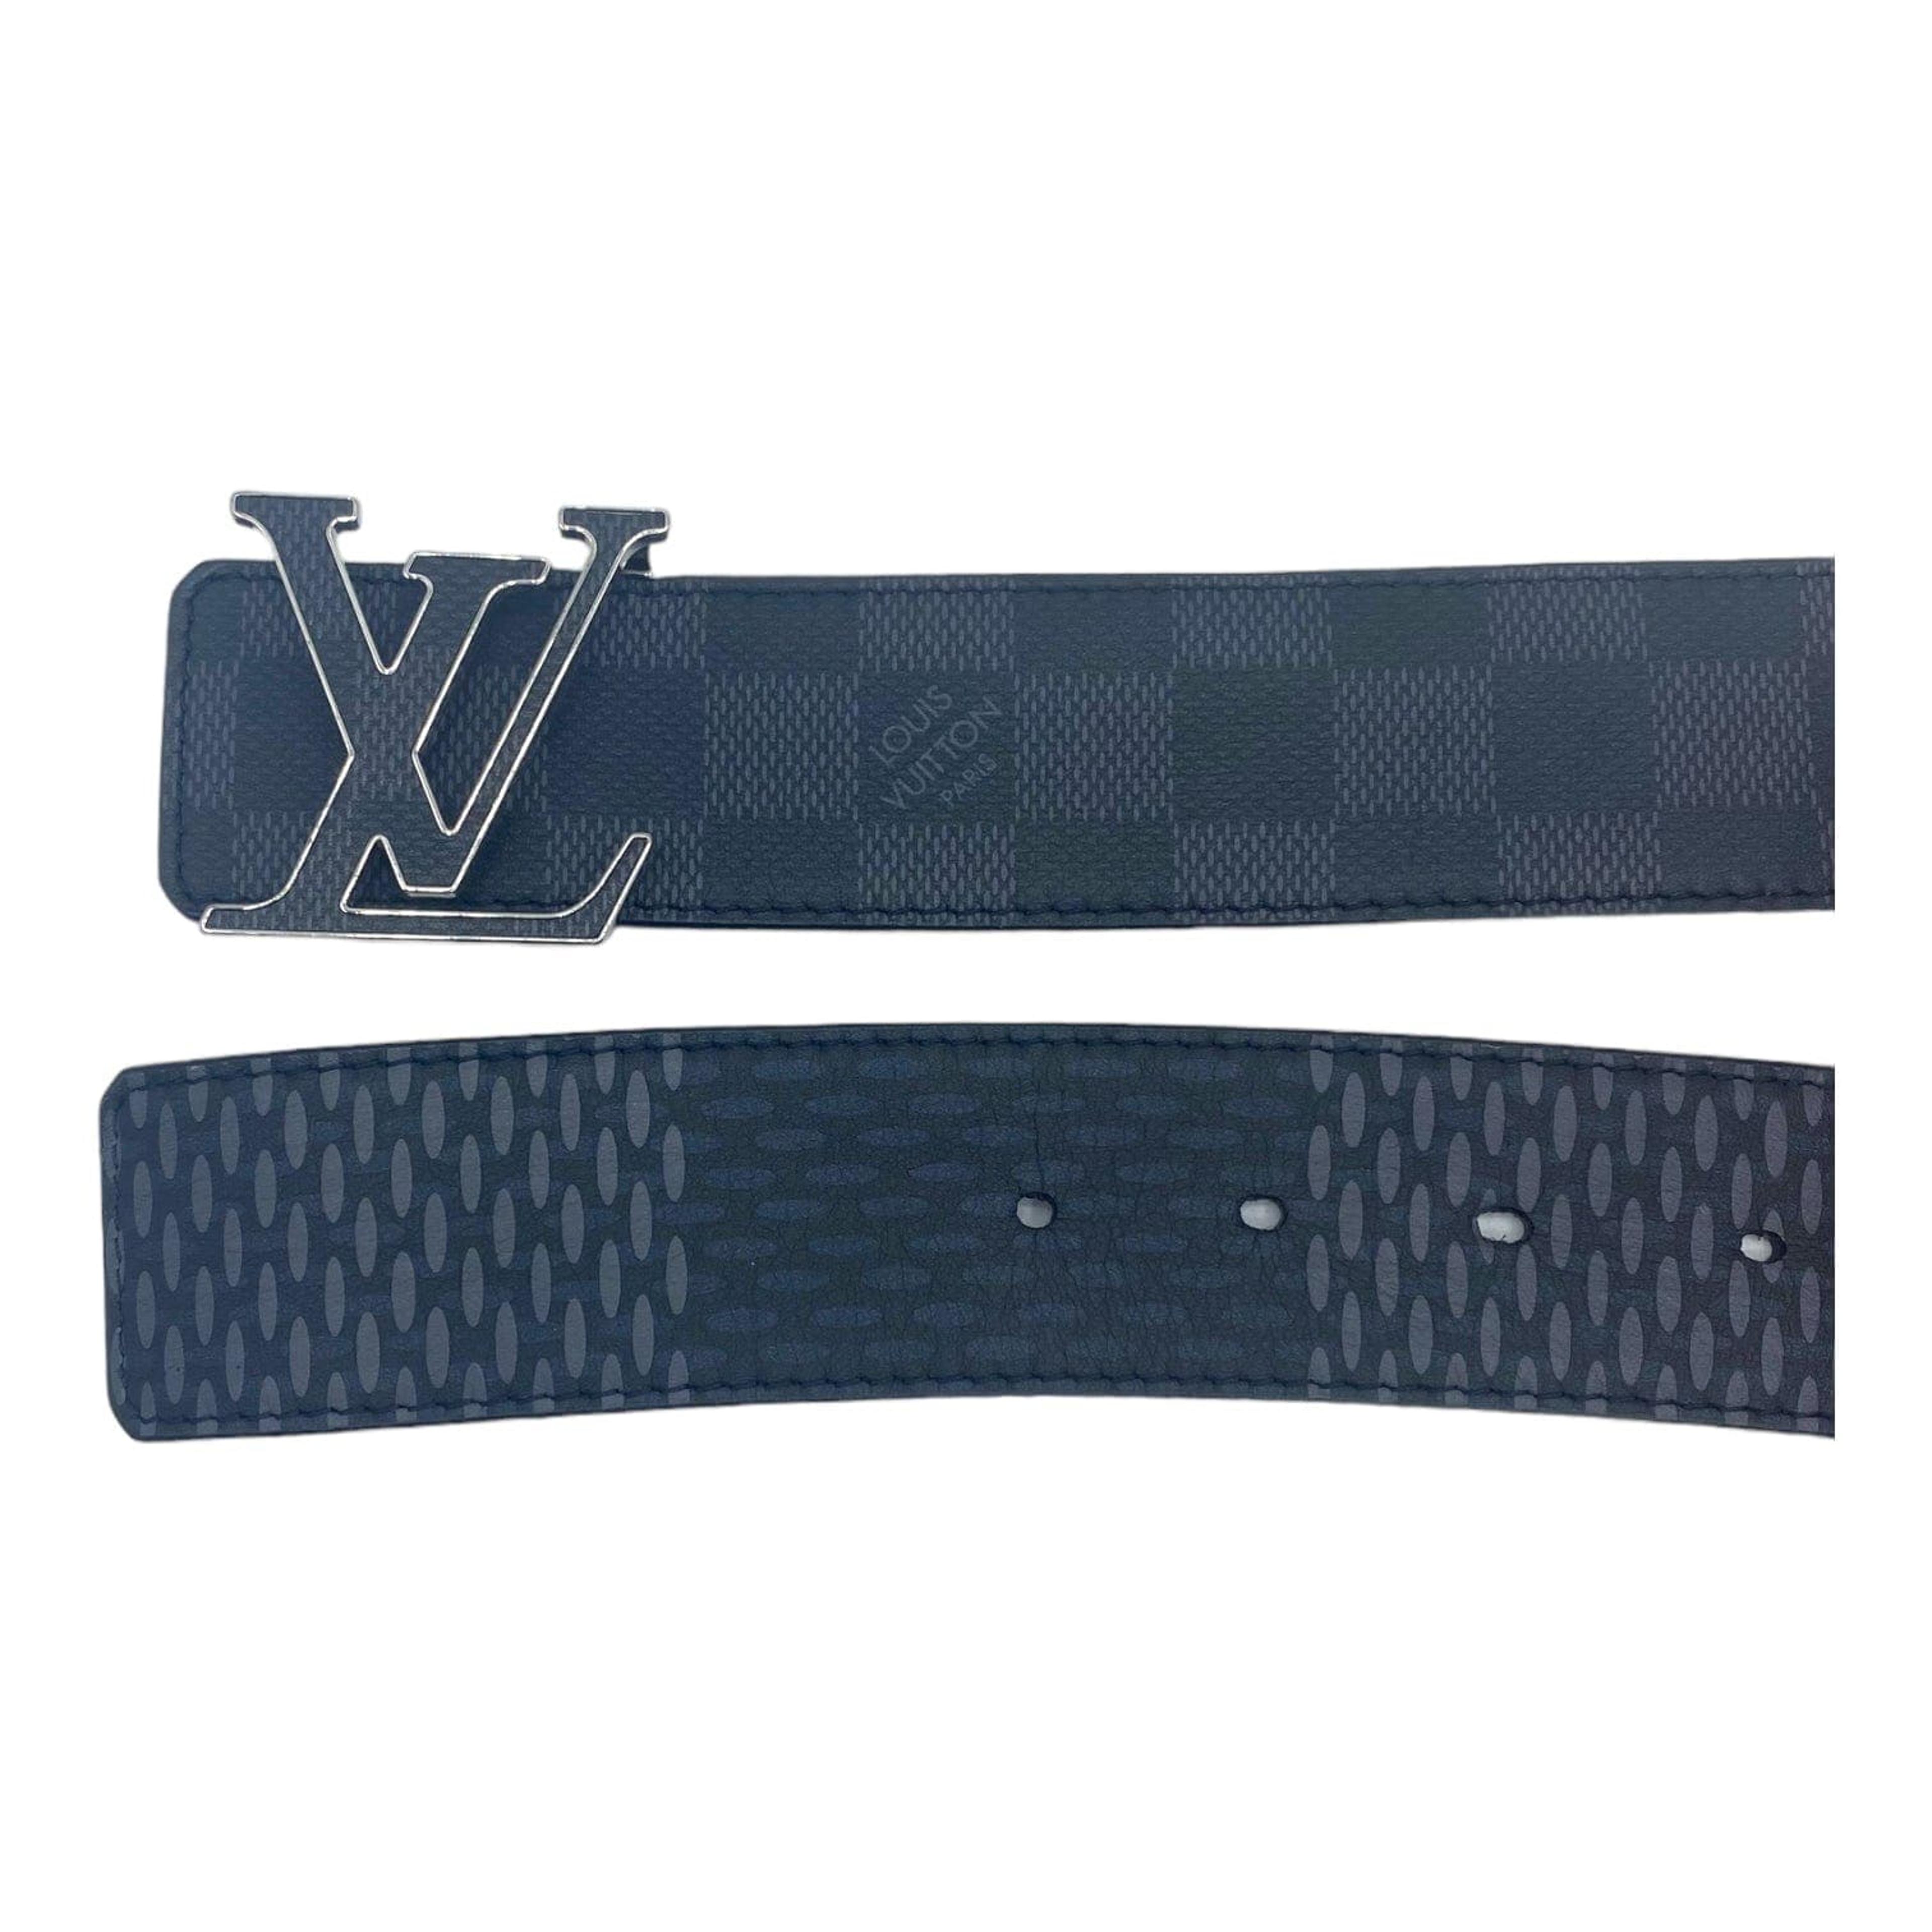 Alternate View 2 of Louis Vuitton LV Initiales 40MM Reversible Belt Damier Graphite 